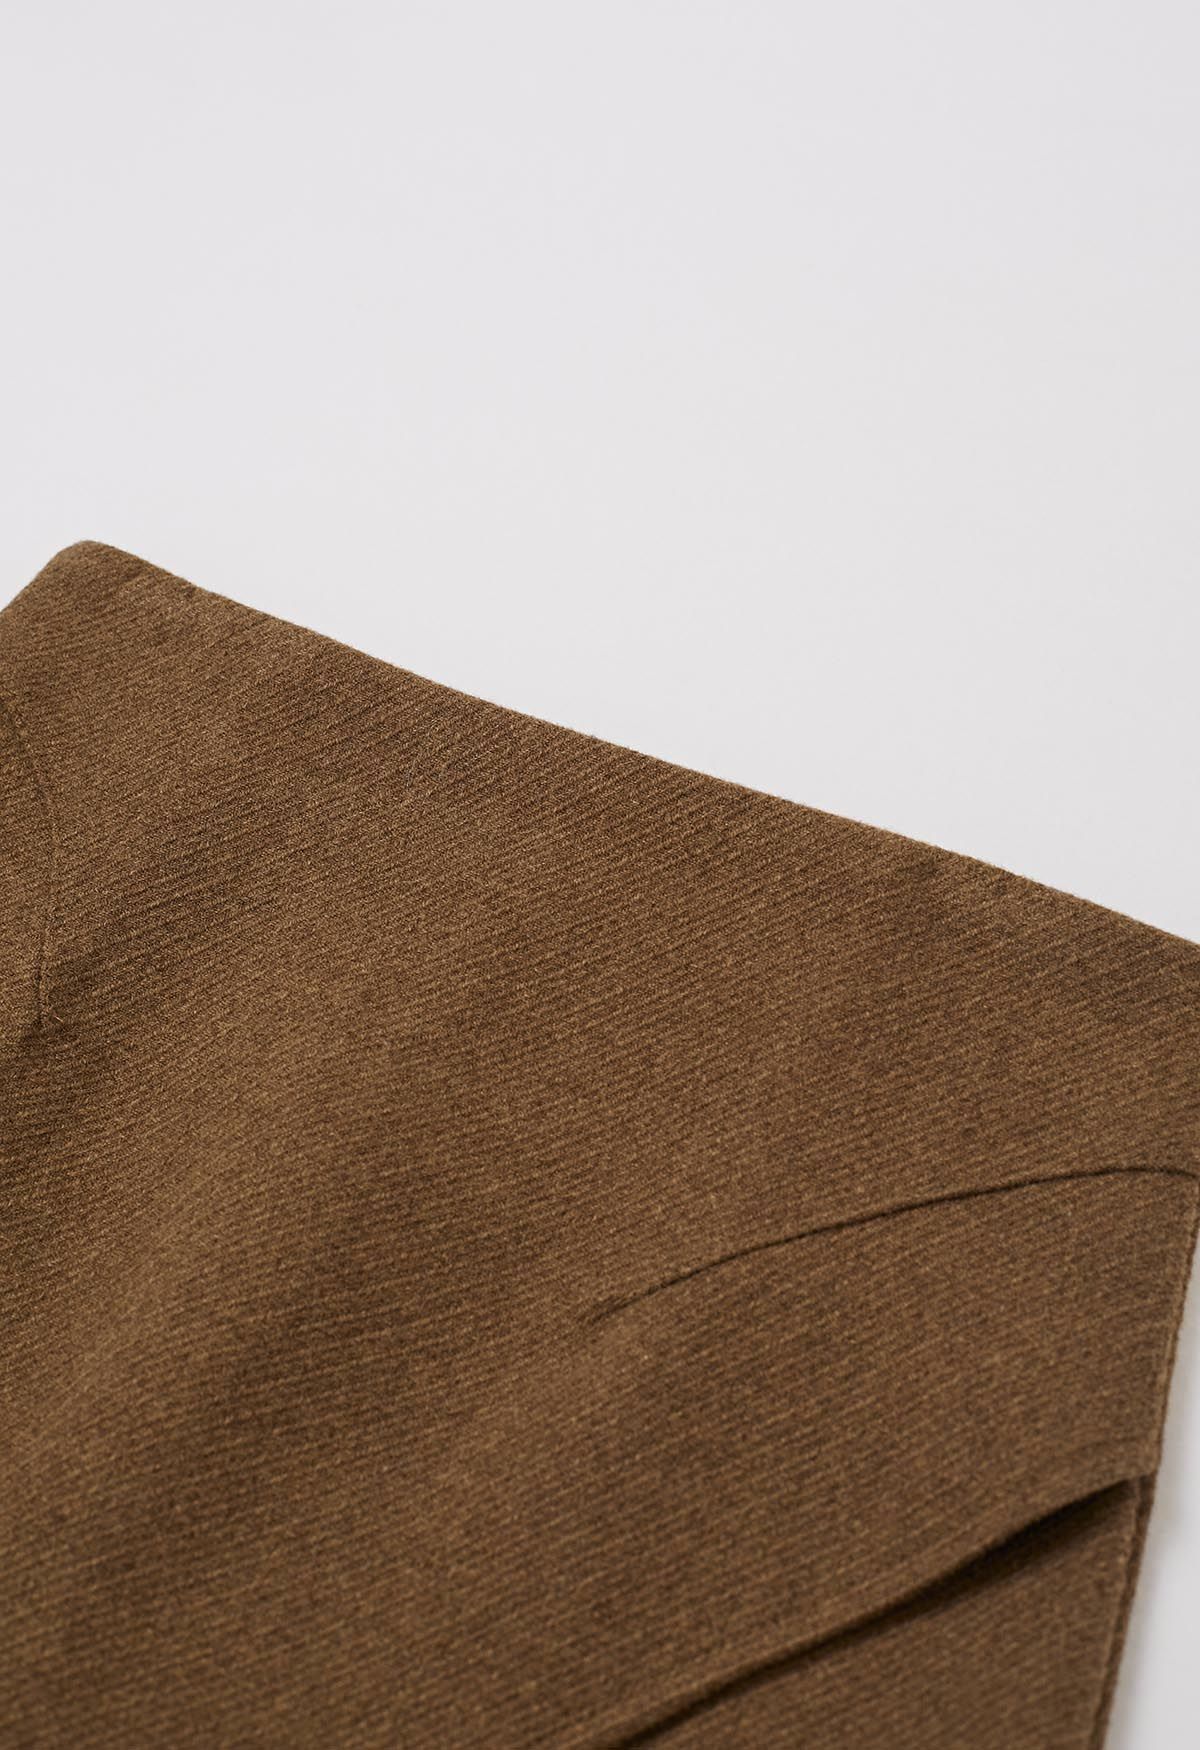 Notched Hem Wool-Blend Flap Mini Skirt in Camel